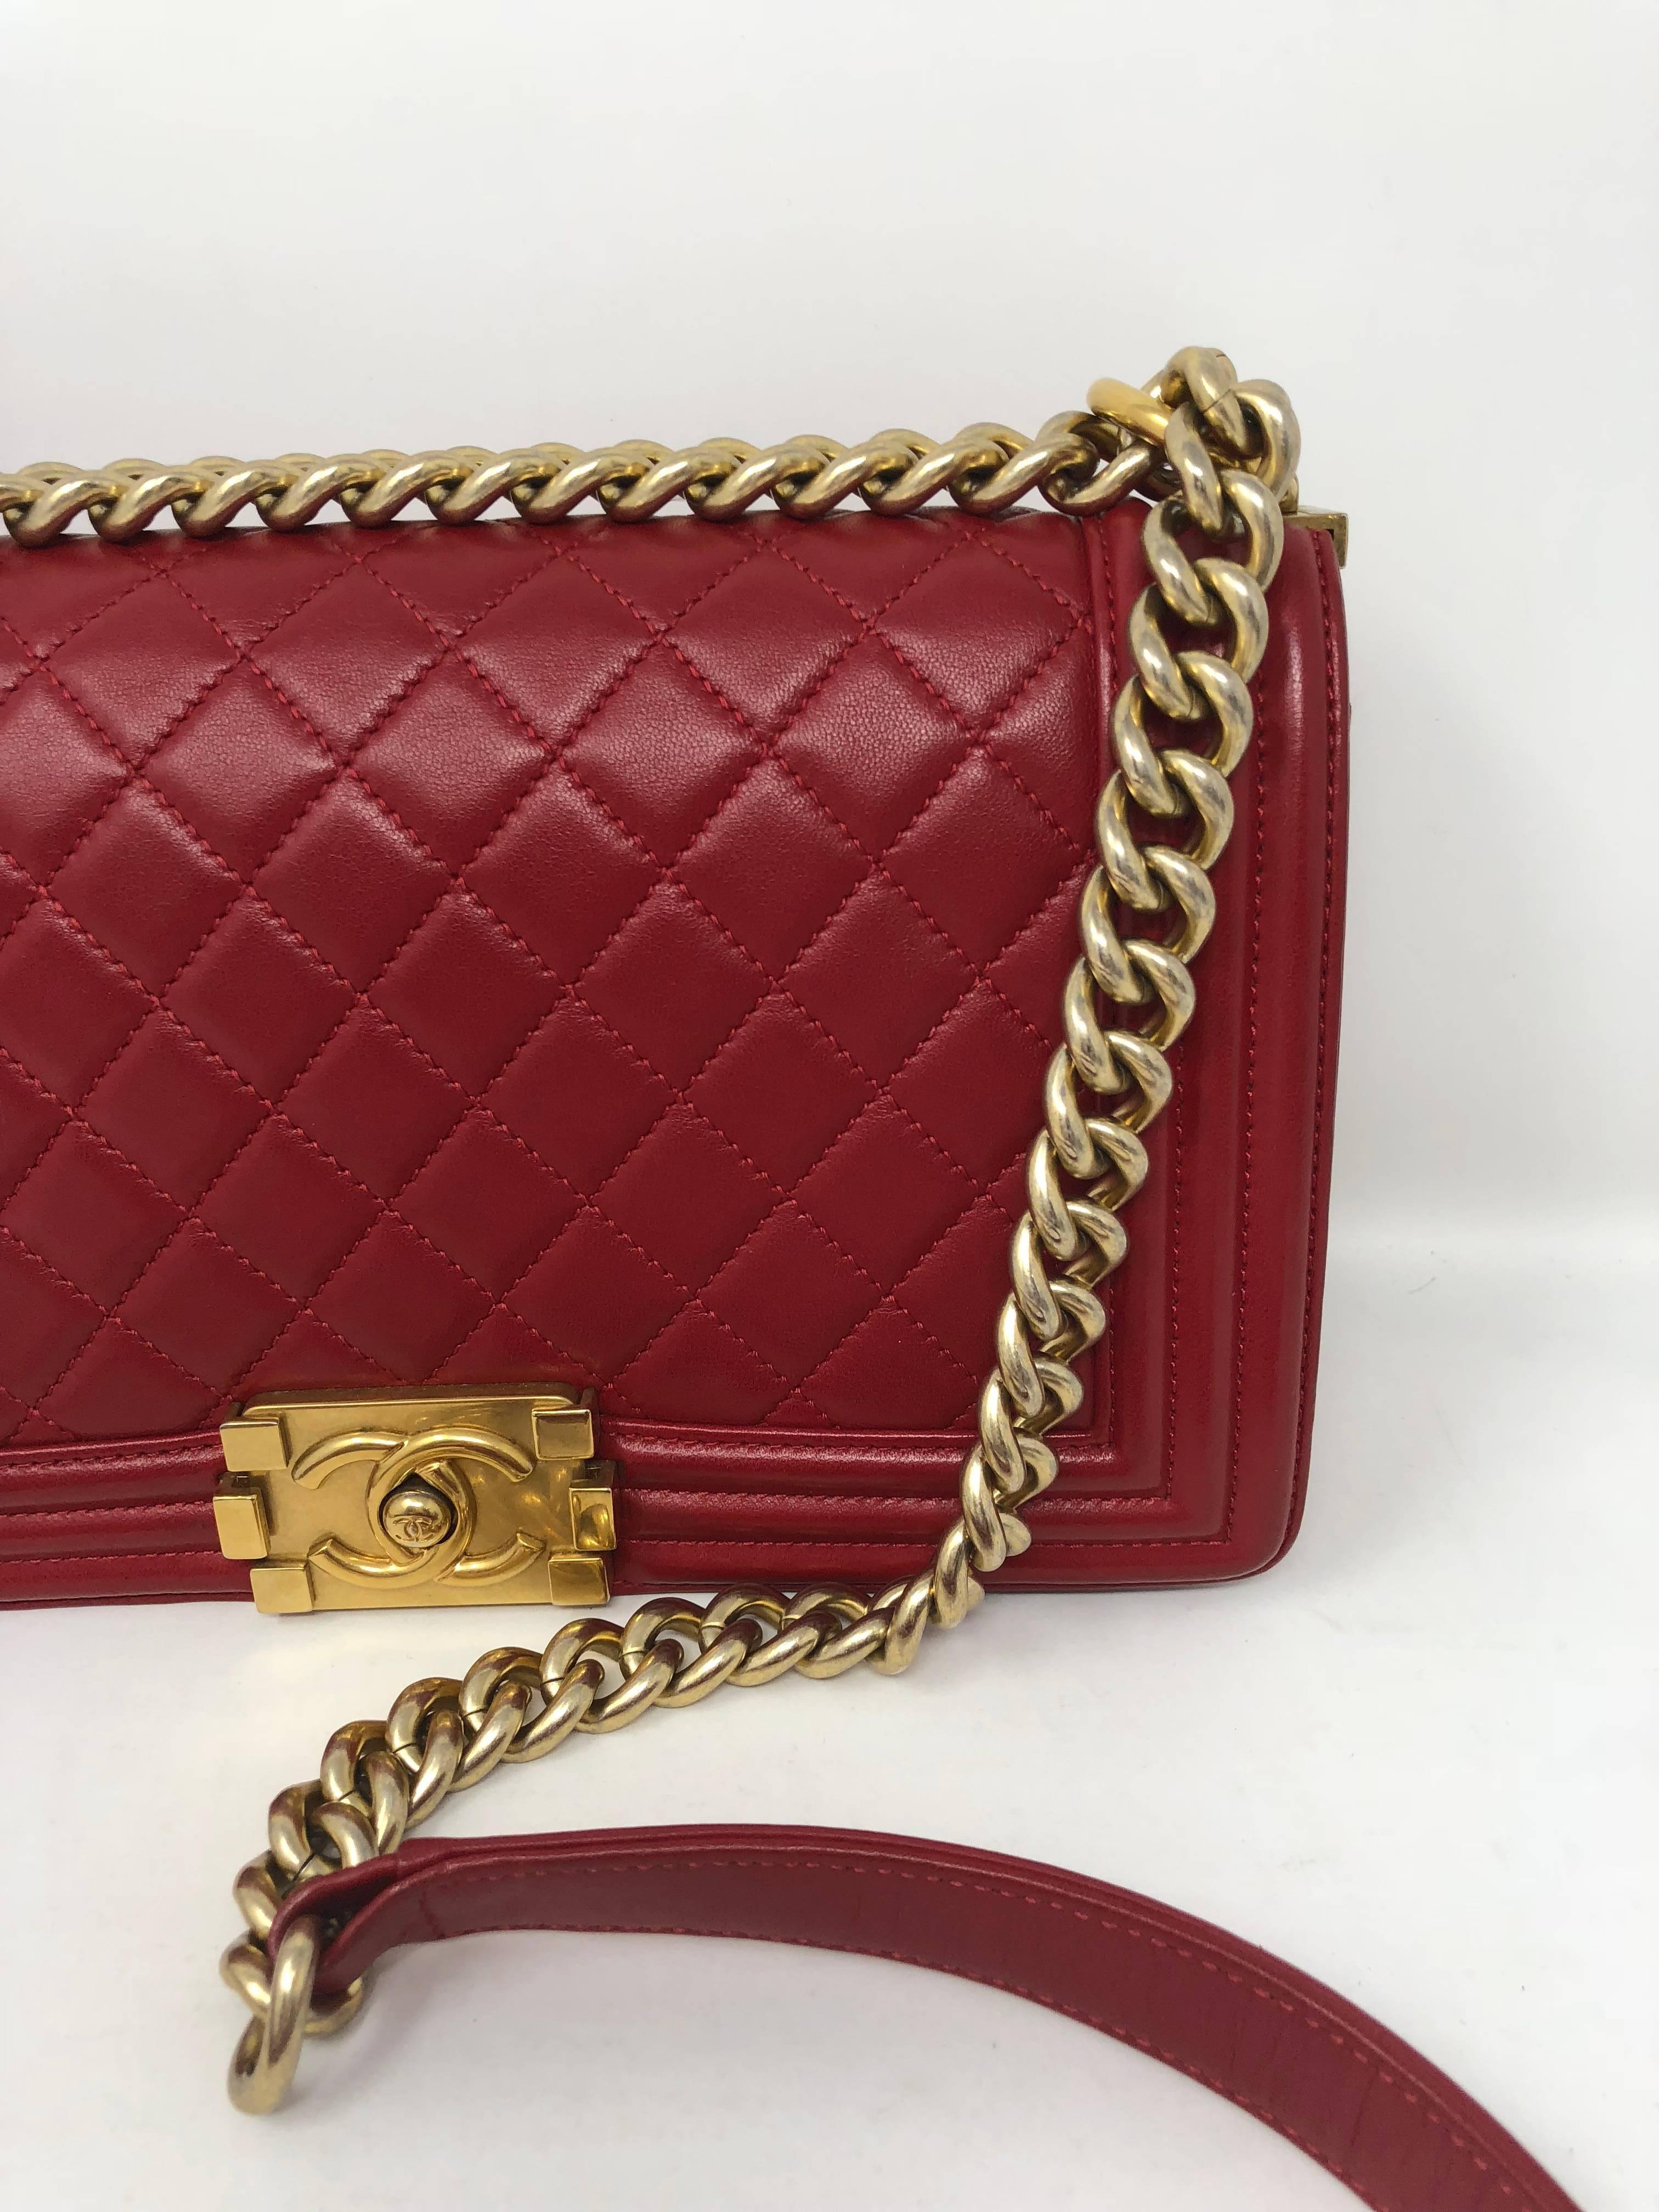 Chanel Le Boy Red Bag 2